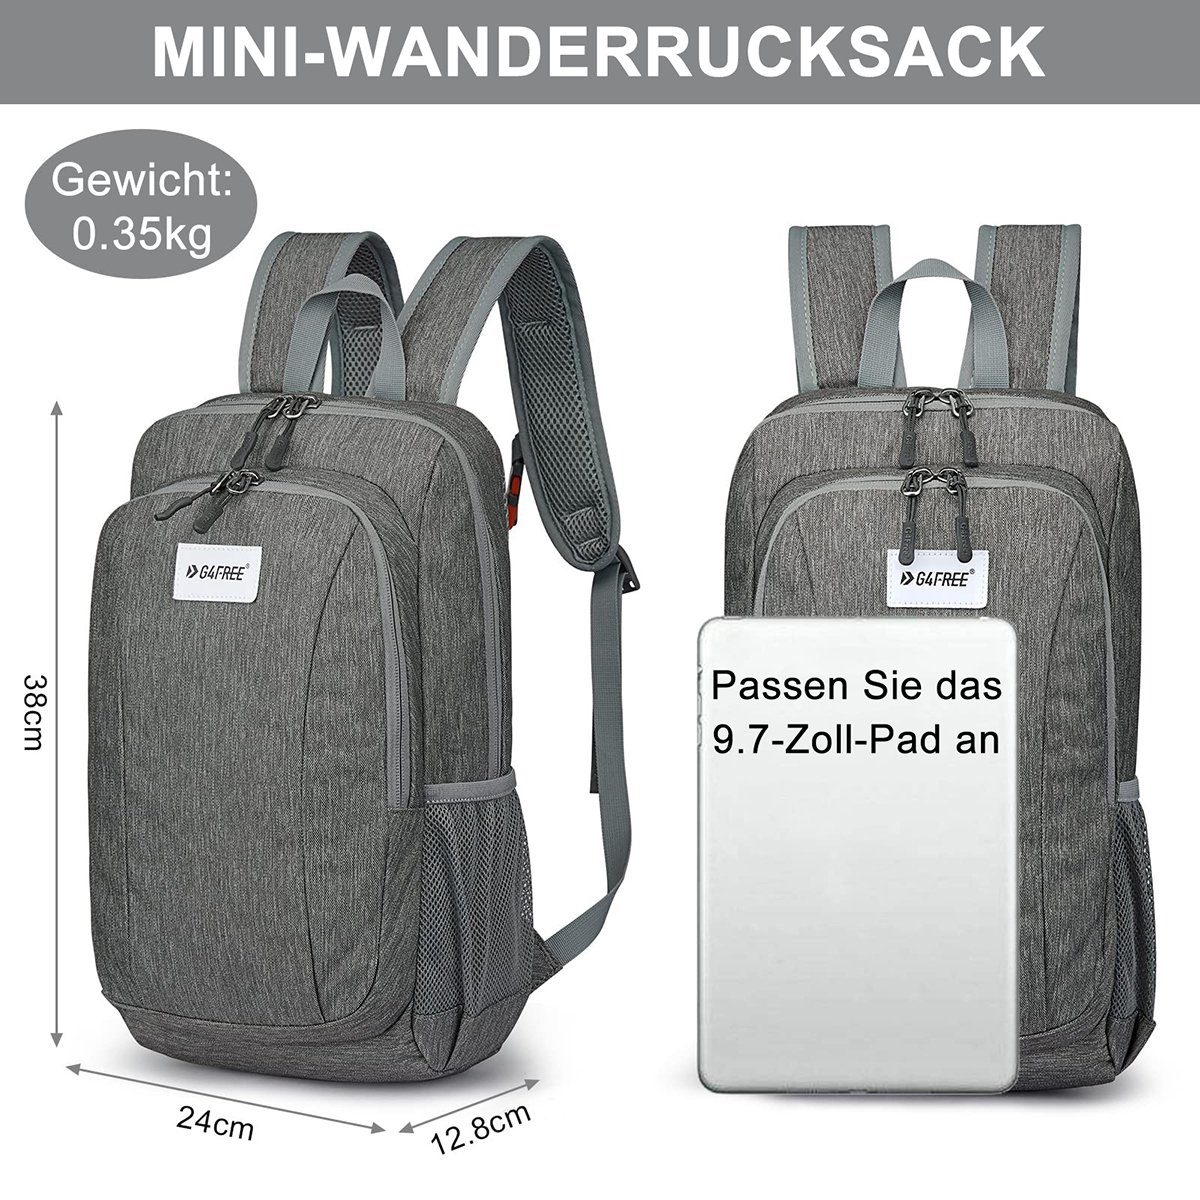 Mini-Wanderrucksack Wanderrucksack, Tages- Schul- Grau Reiserucksack G4Free